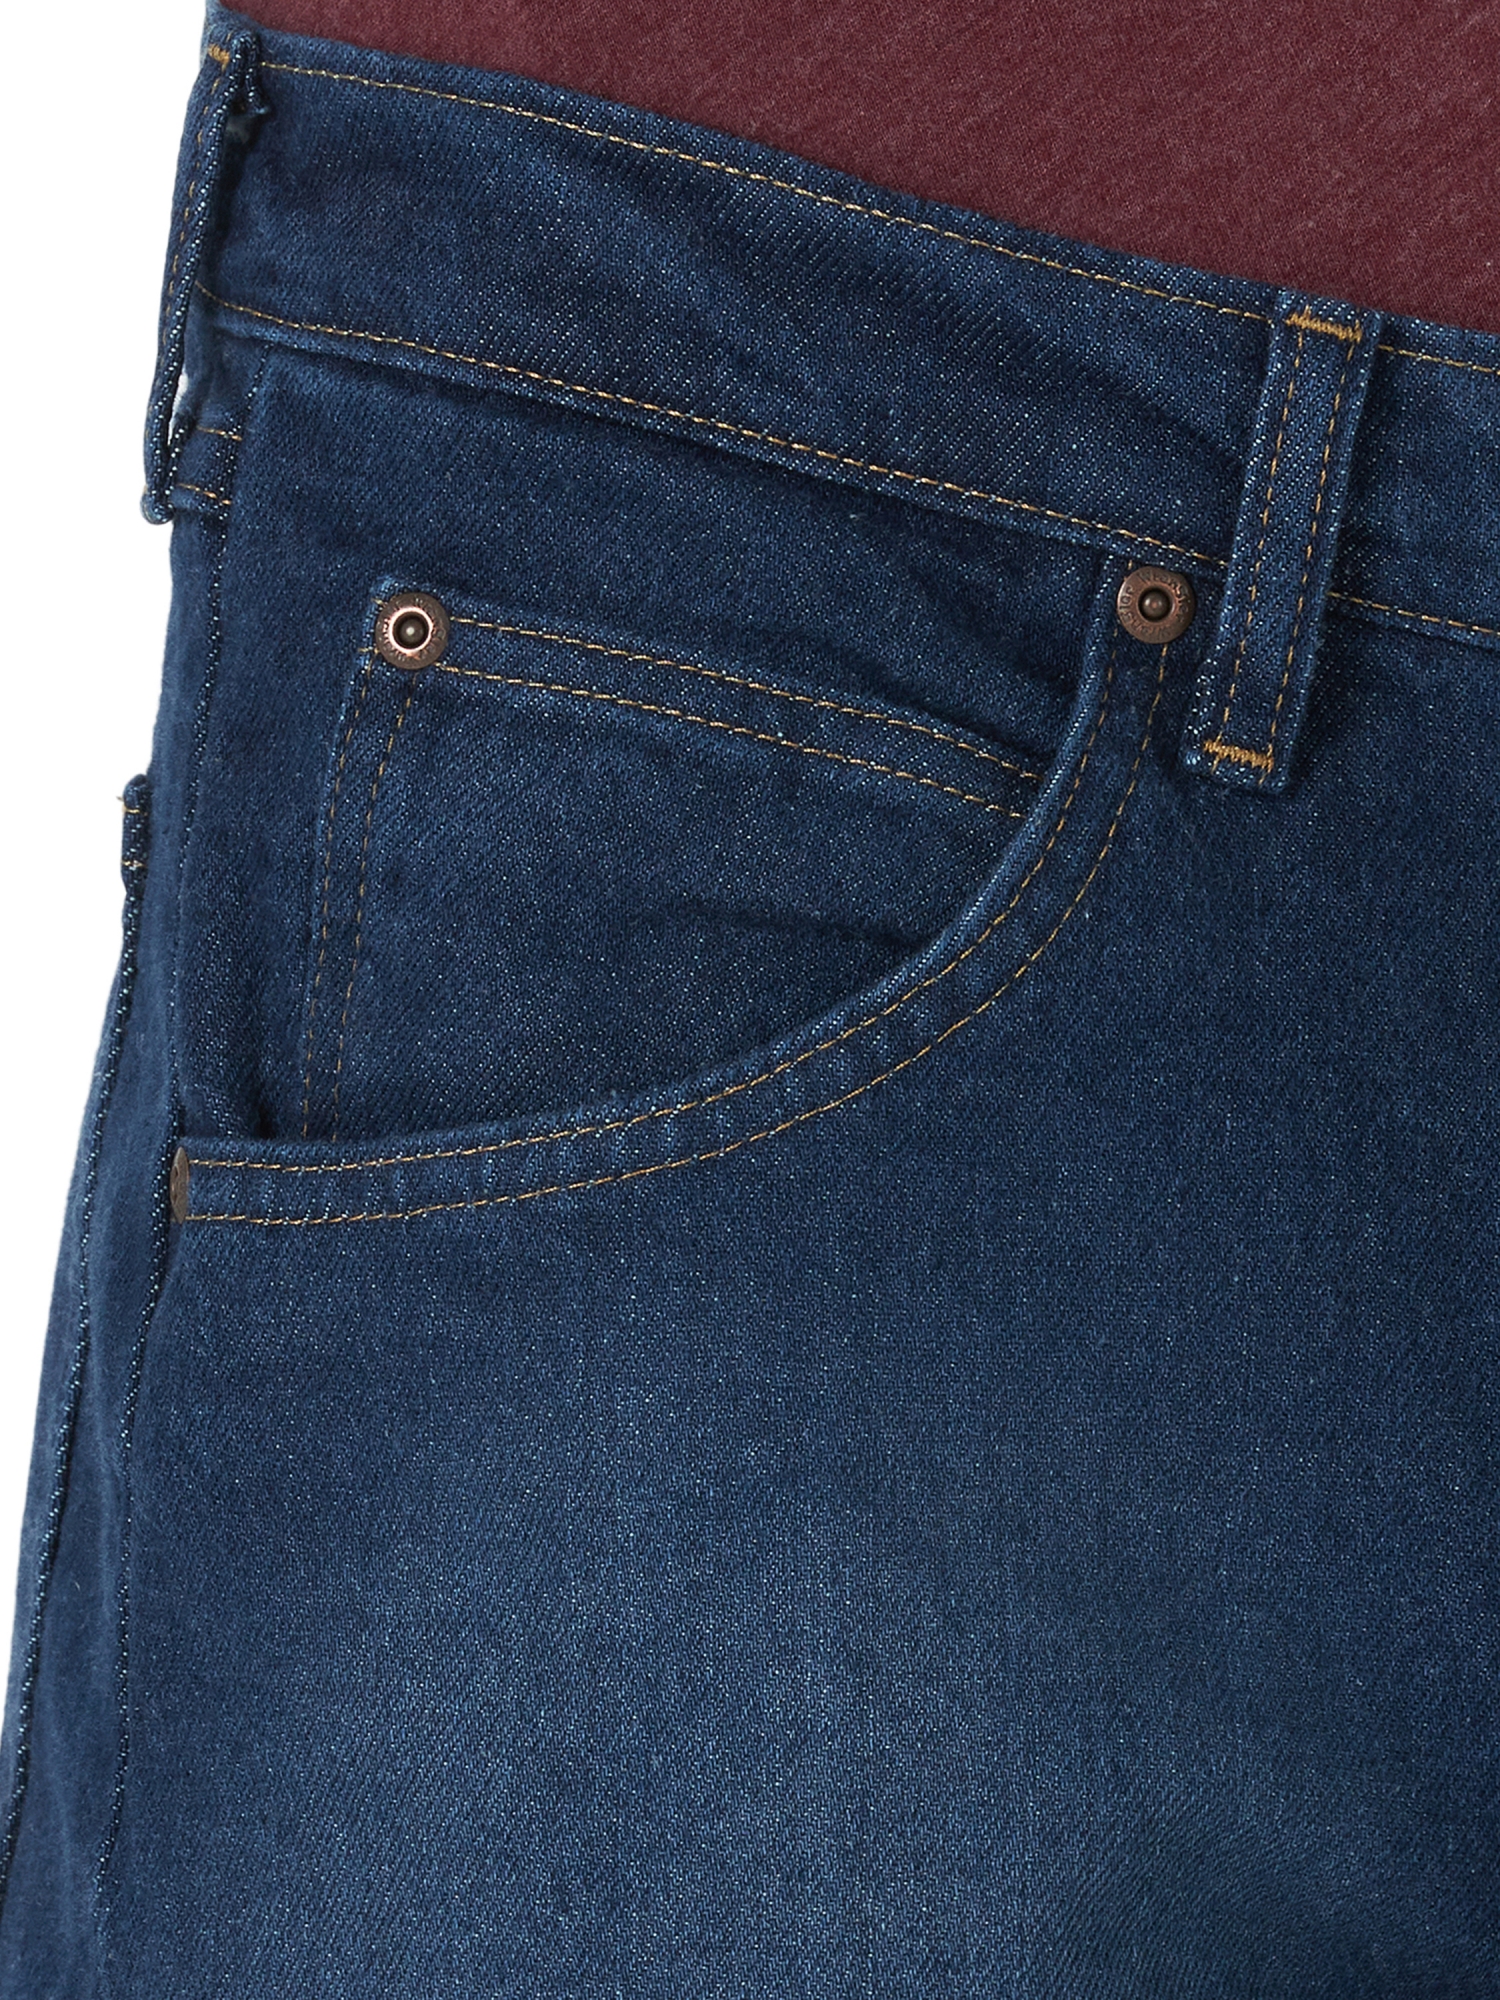 Wrangler Men's and Big Men's Regular Fit Jeans with Flex - image 5 of 7